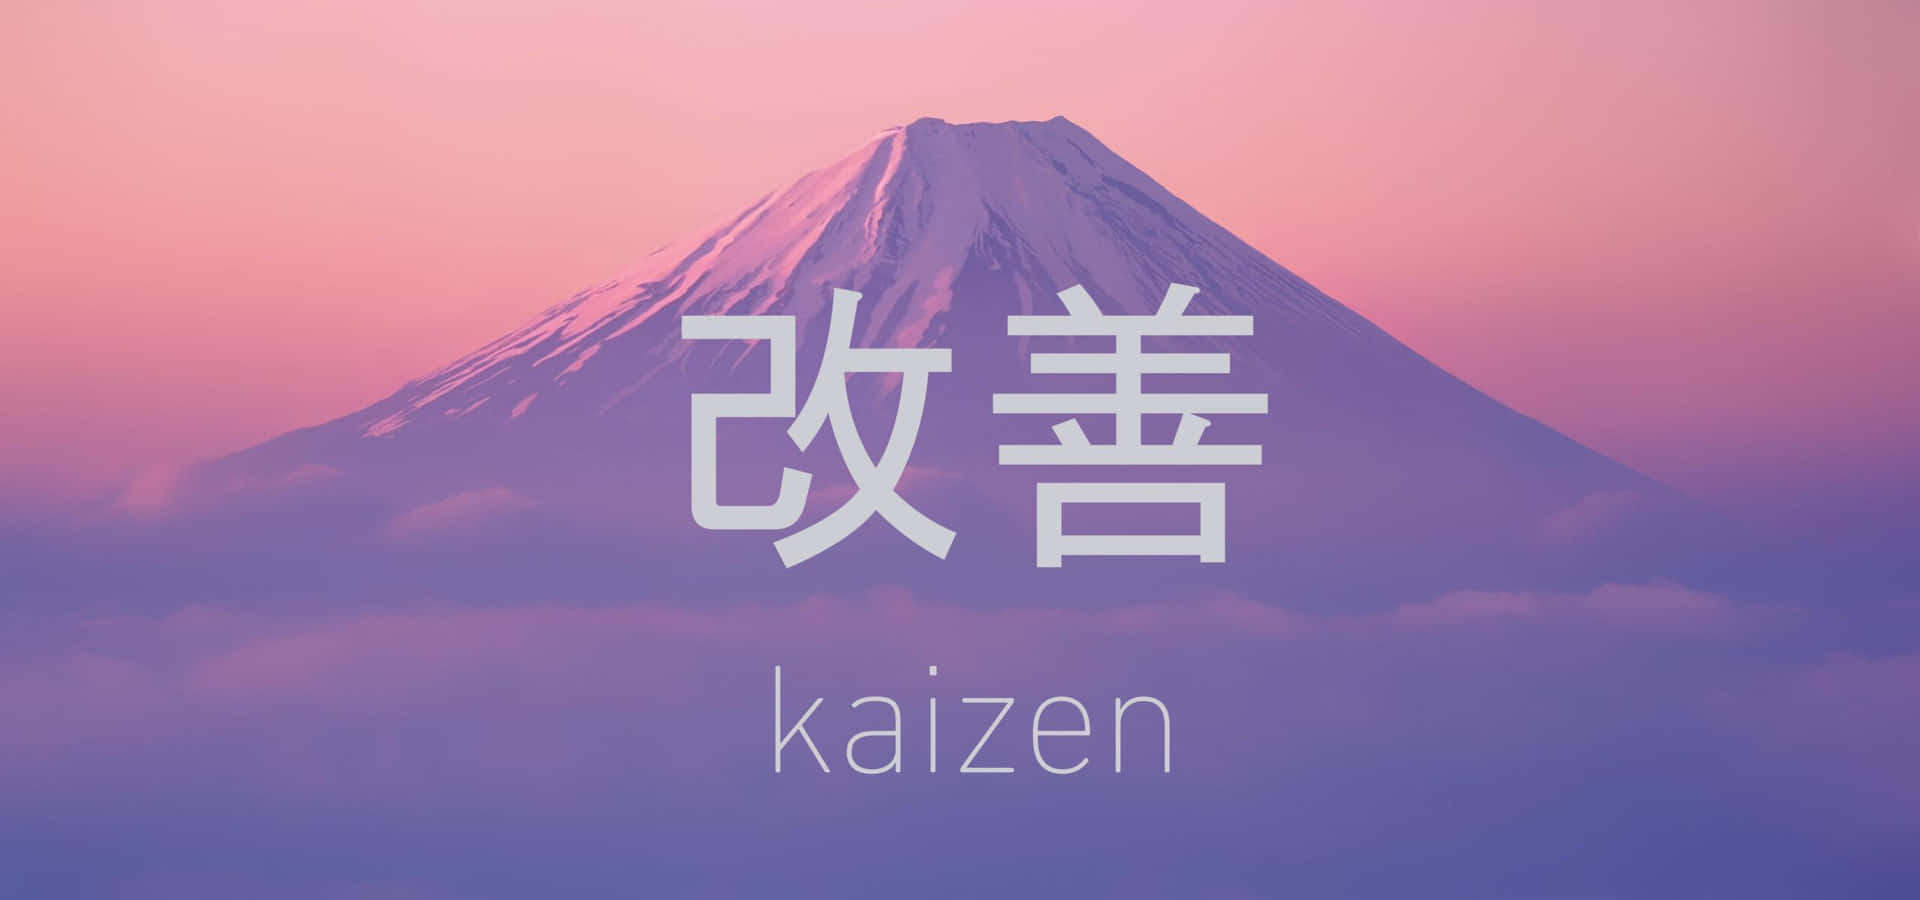 Mount Fuji Kaizen Concept Wallpaper